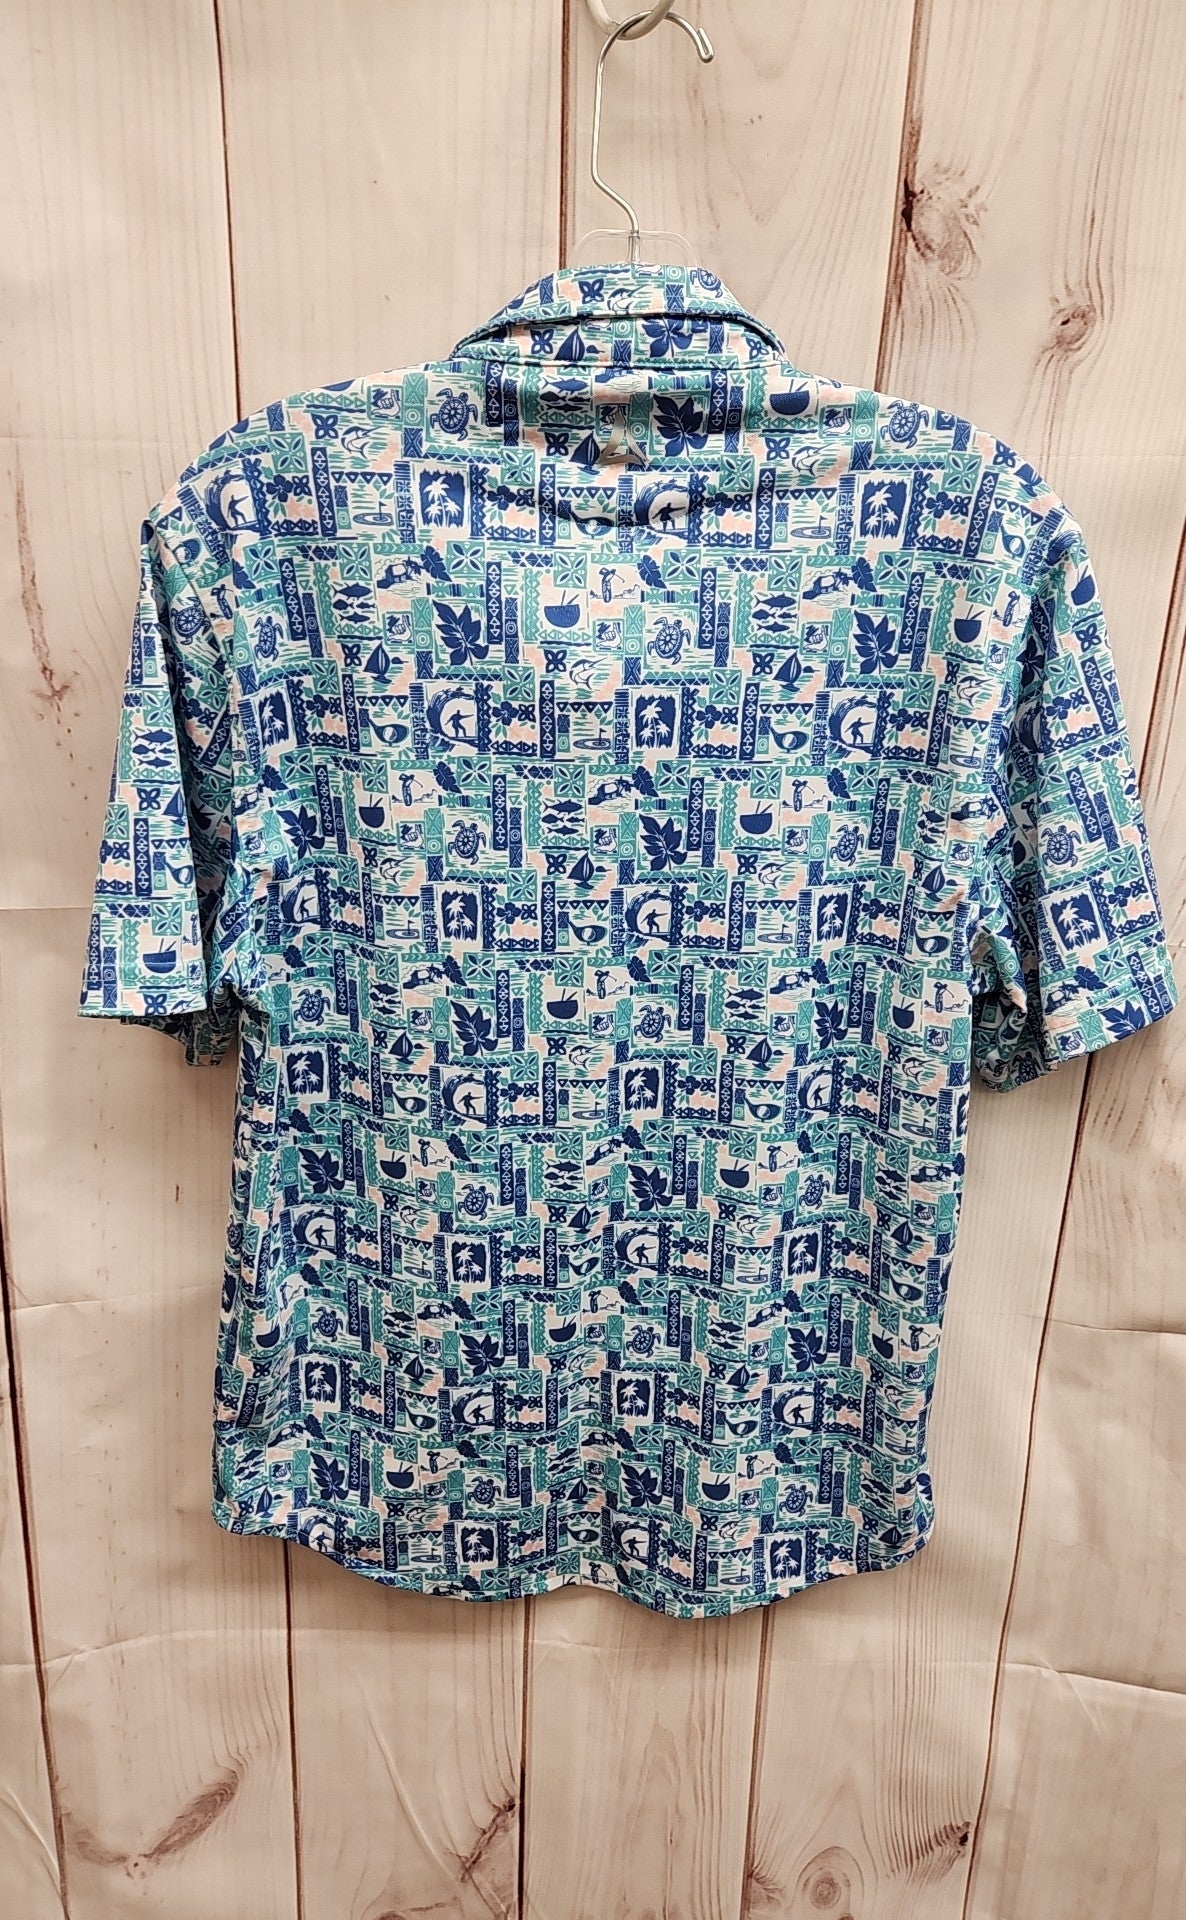 Bermuda Men's Size S Turquoise Shirt